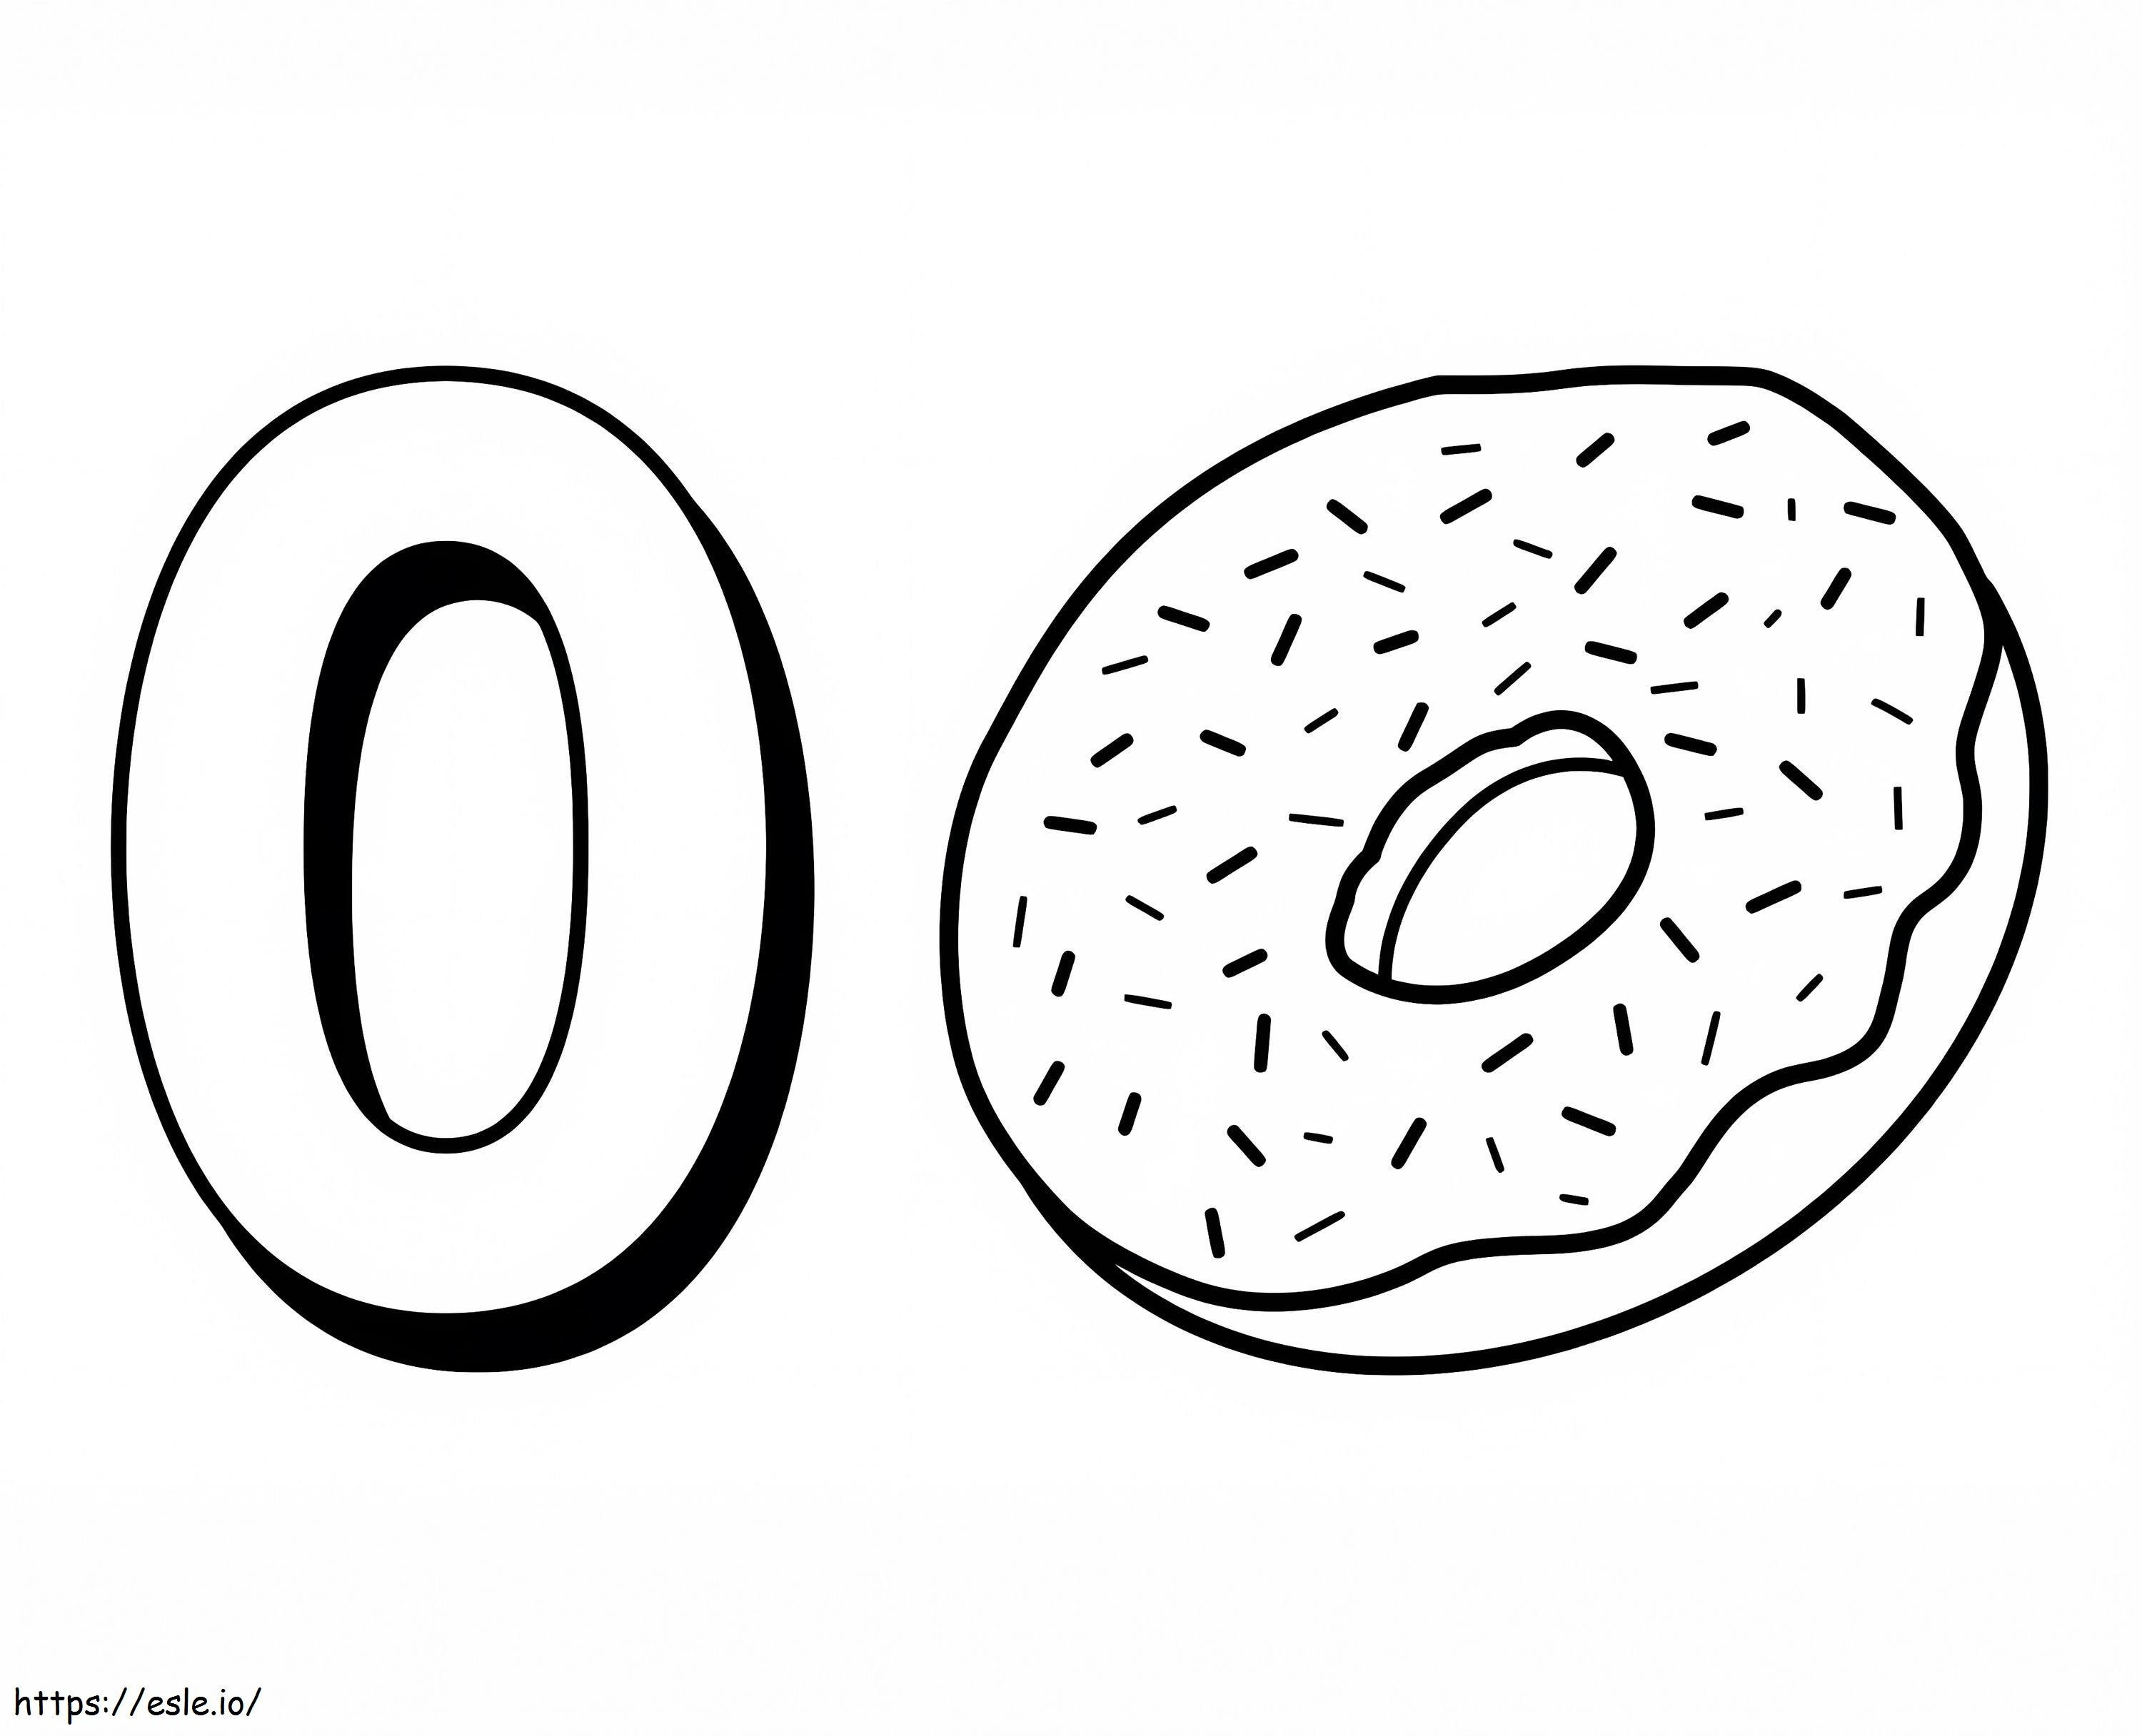 Donut e número 0 para colorir